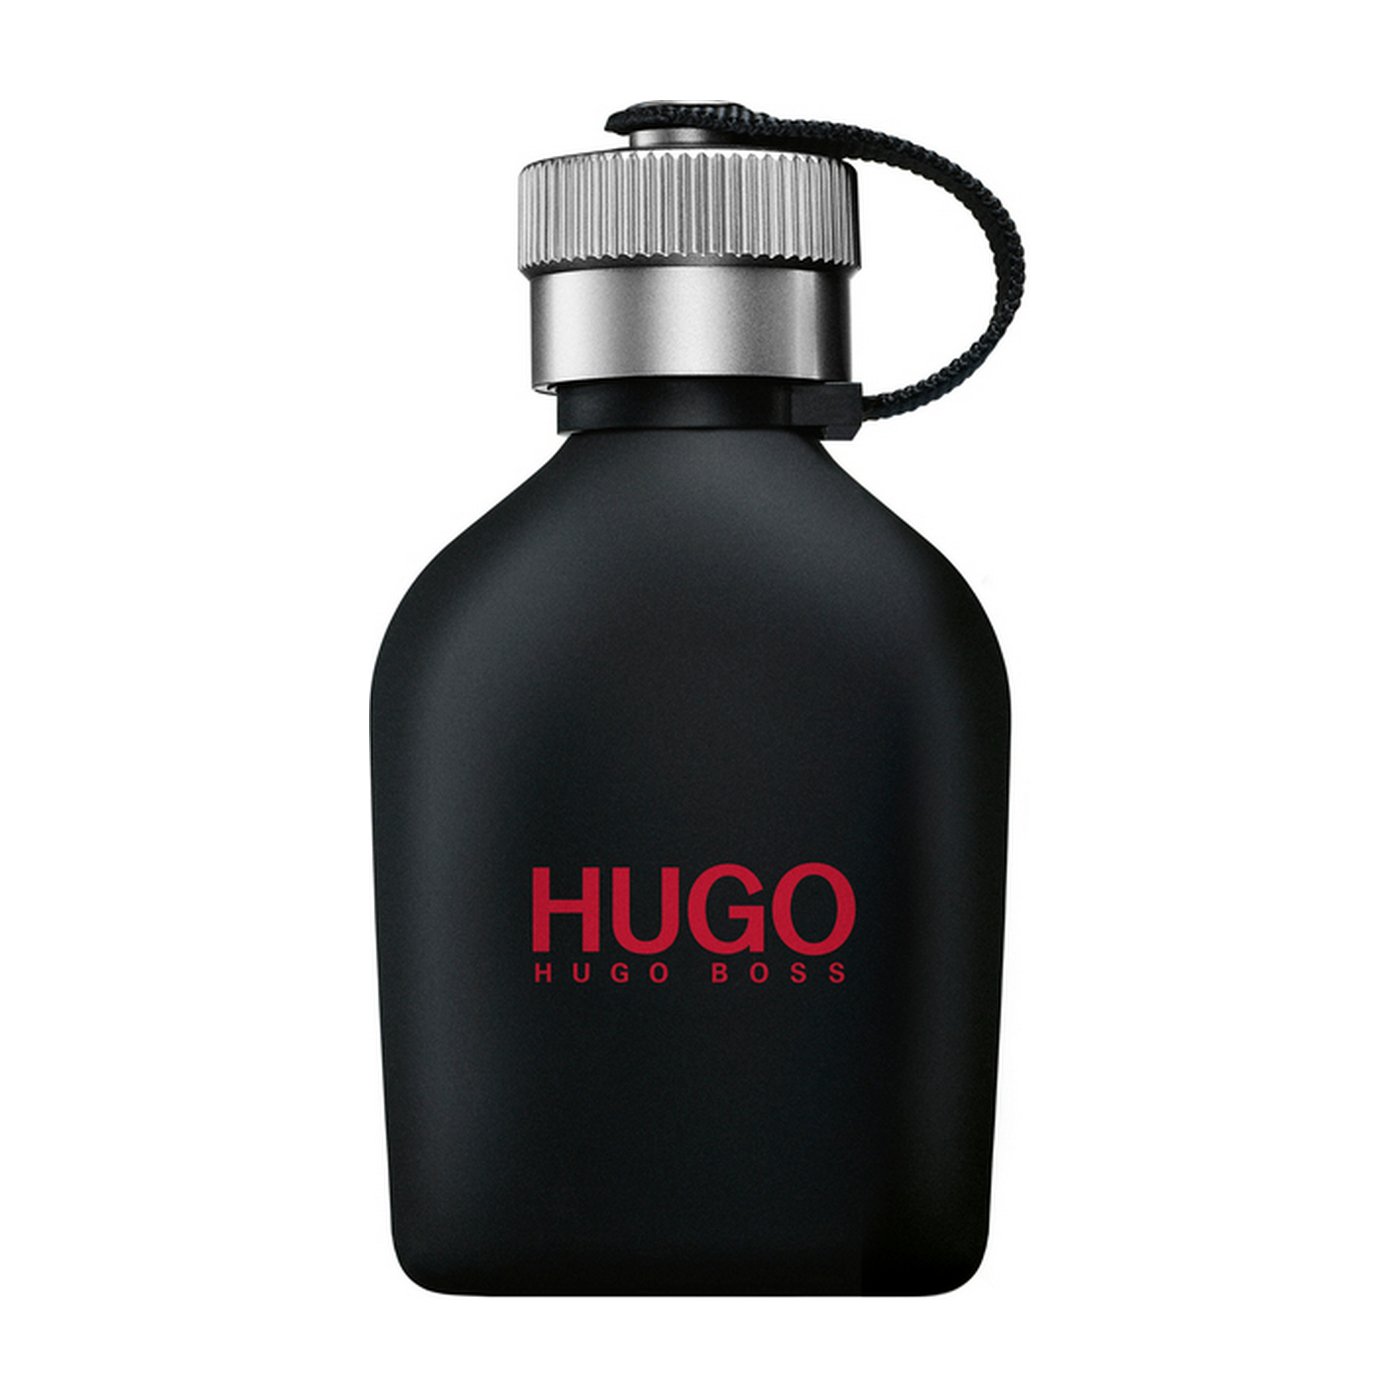 Туалетная вода хуго босс цена. Hugo "Hugo Boss just different" 100 ml. Hugo Boss "Hugo just different" EDT, 100ml. Hugo Boss Hugo just different [m] EDT - 125ml. Hugo Boss Hugo men 100 мл.